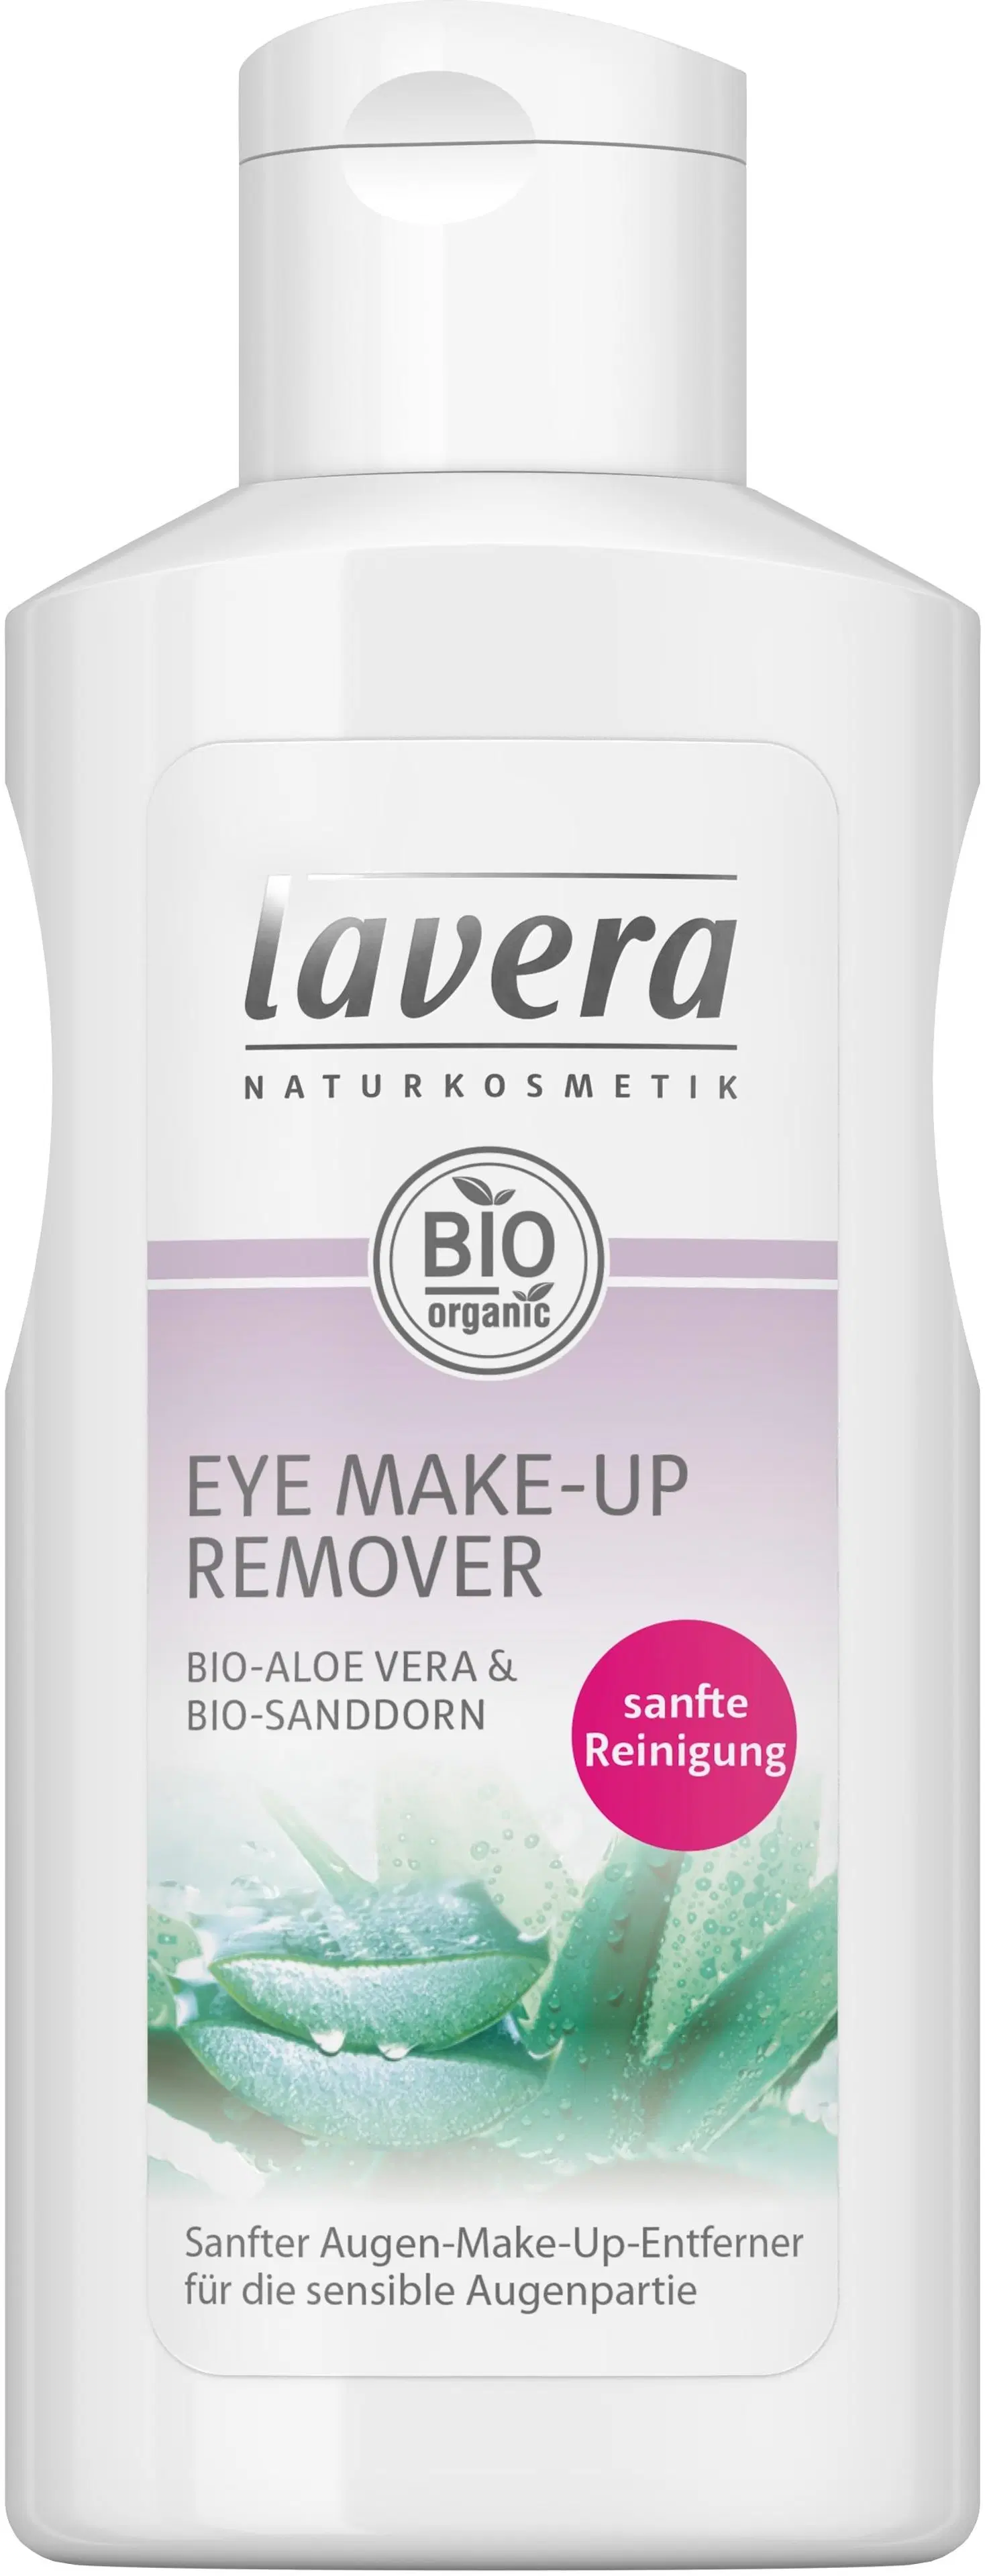 lavera Trend Sensitiv Eye Make-up Remover 125ml